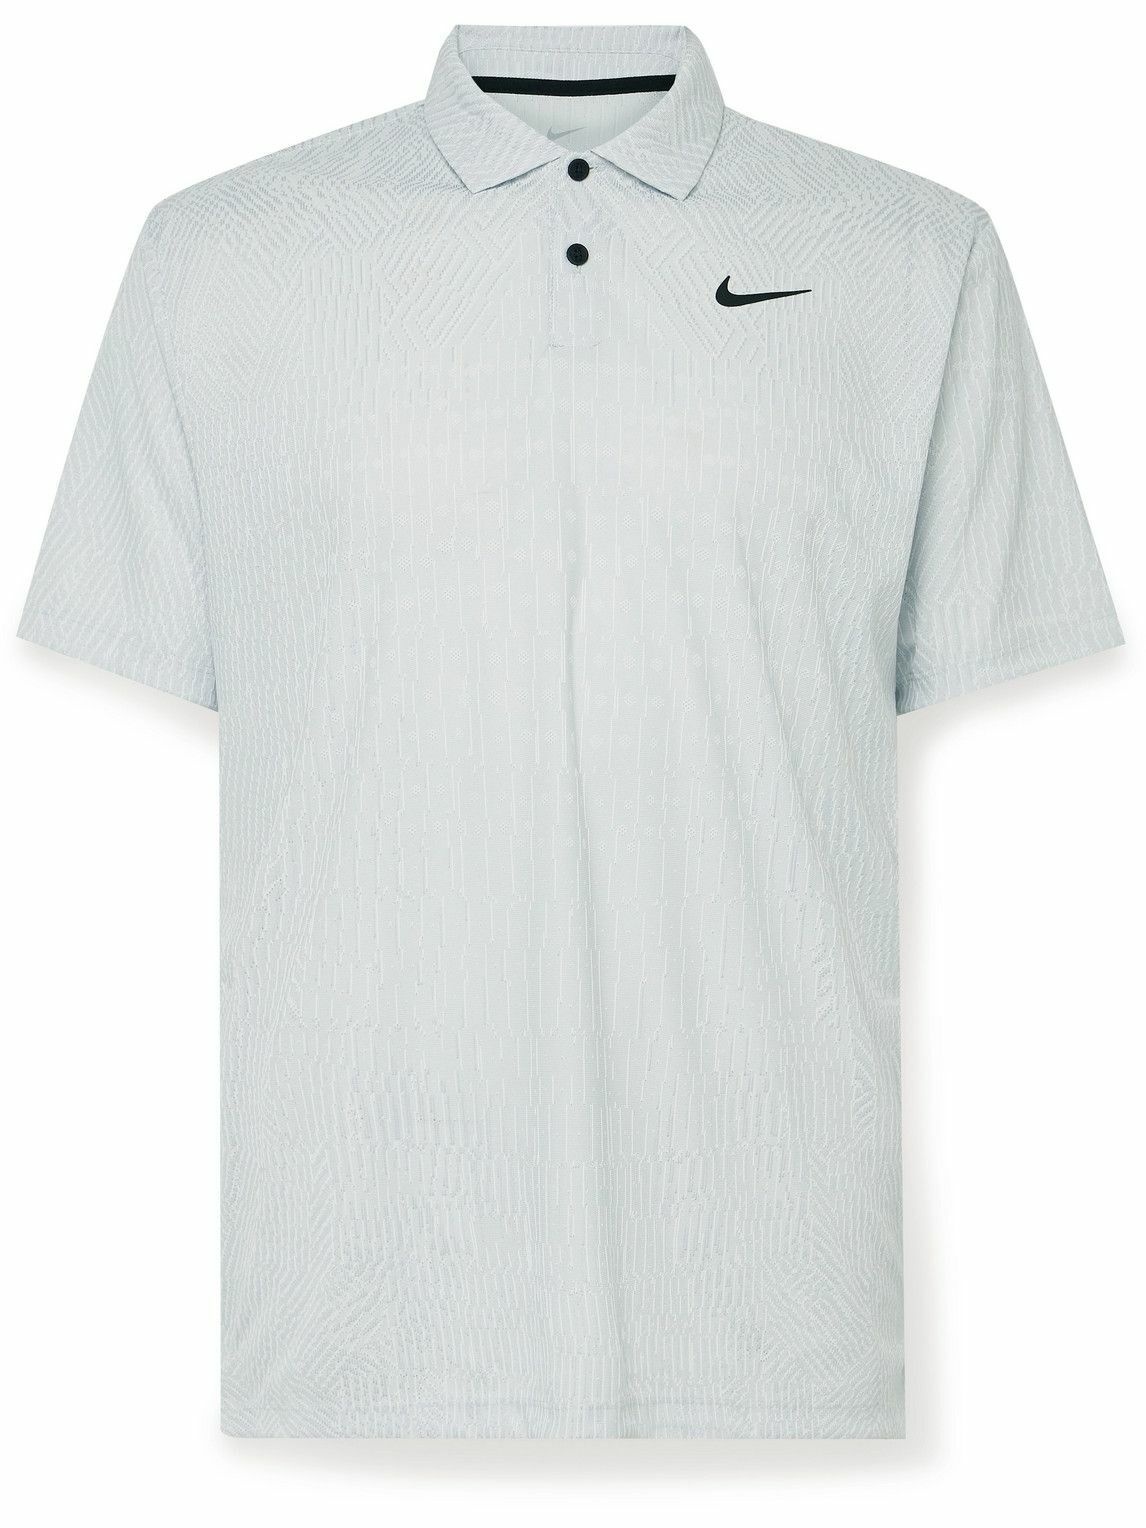 Nike Golf - Tiger Woods Vapor Striped Dri-FIT Polo Shirt - Blue Nike Golf